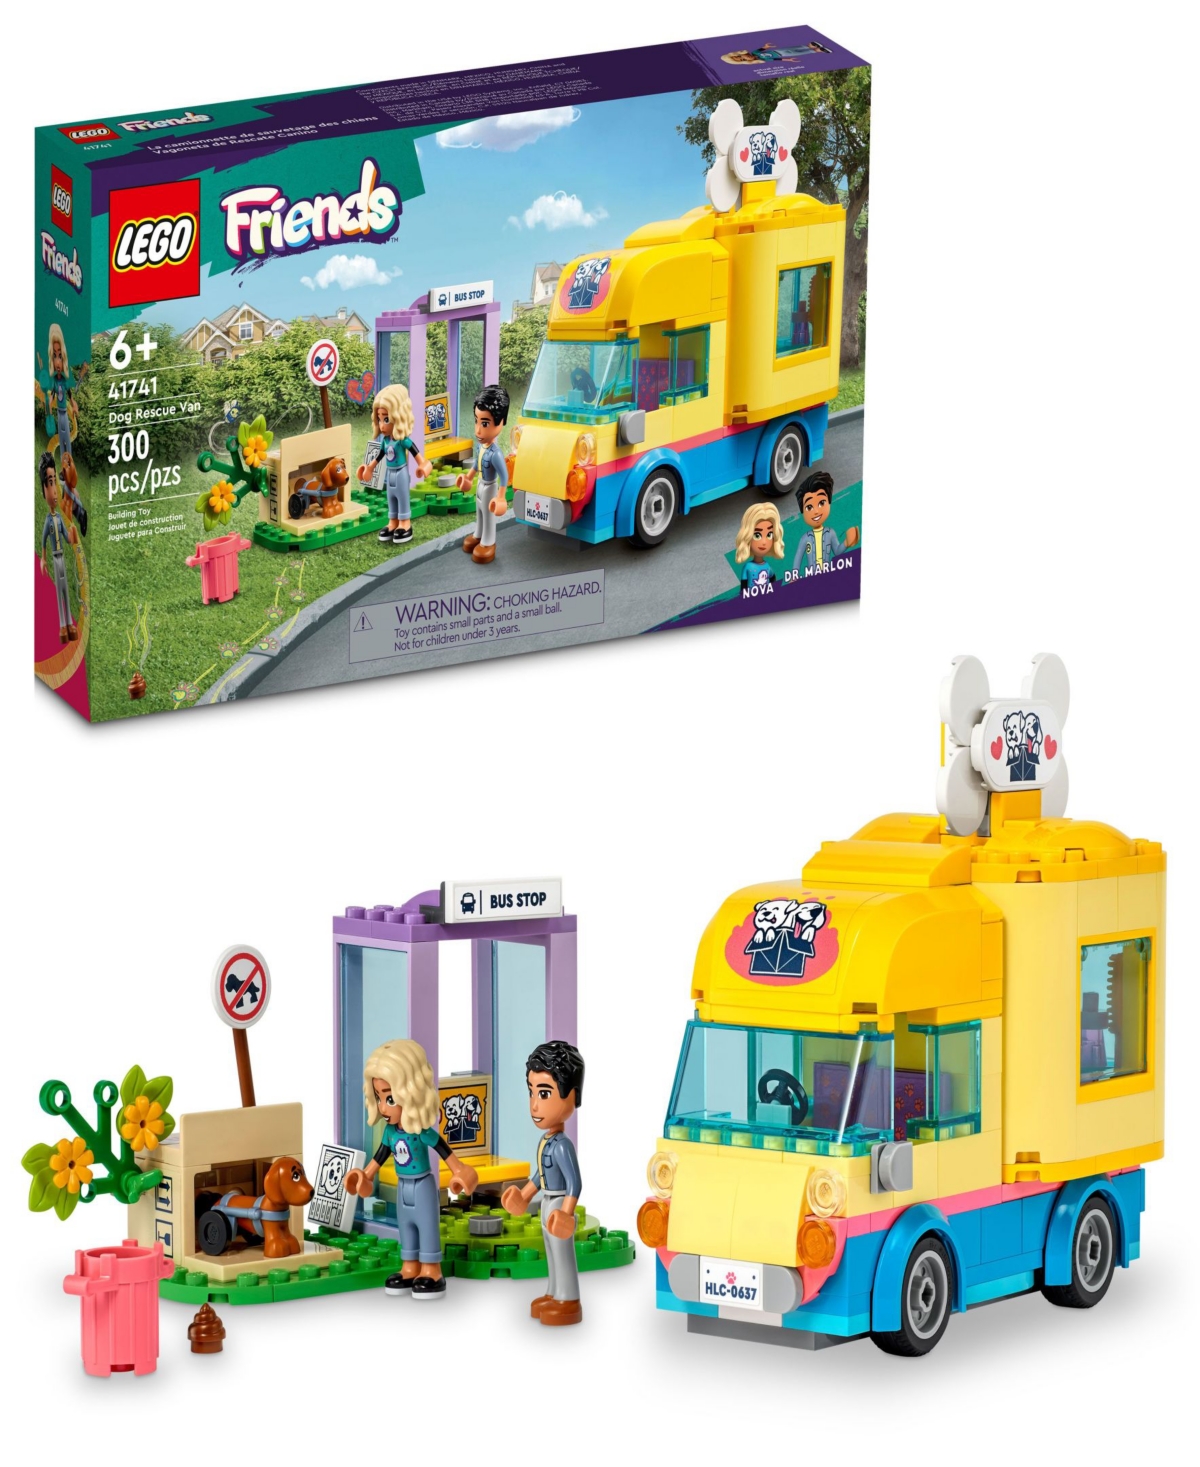 Lego Kids' Friends Dog Rescue Van 41741 Building Set, 300 Pieces In Multicolor